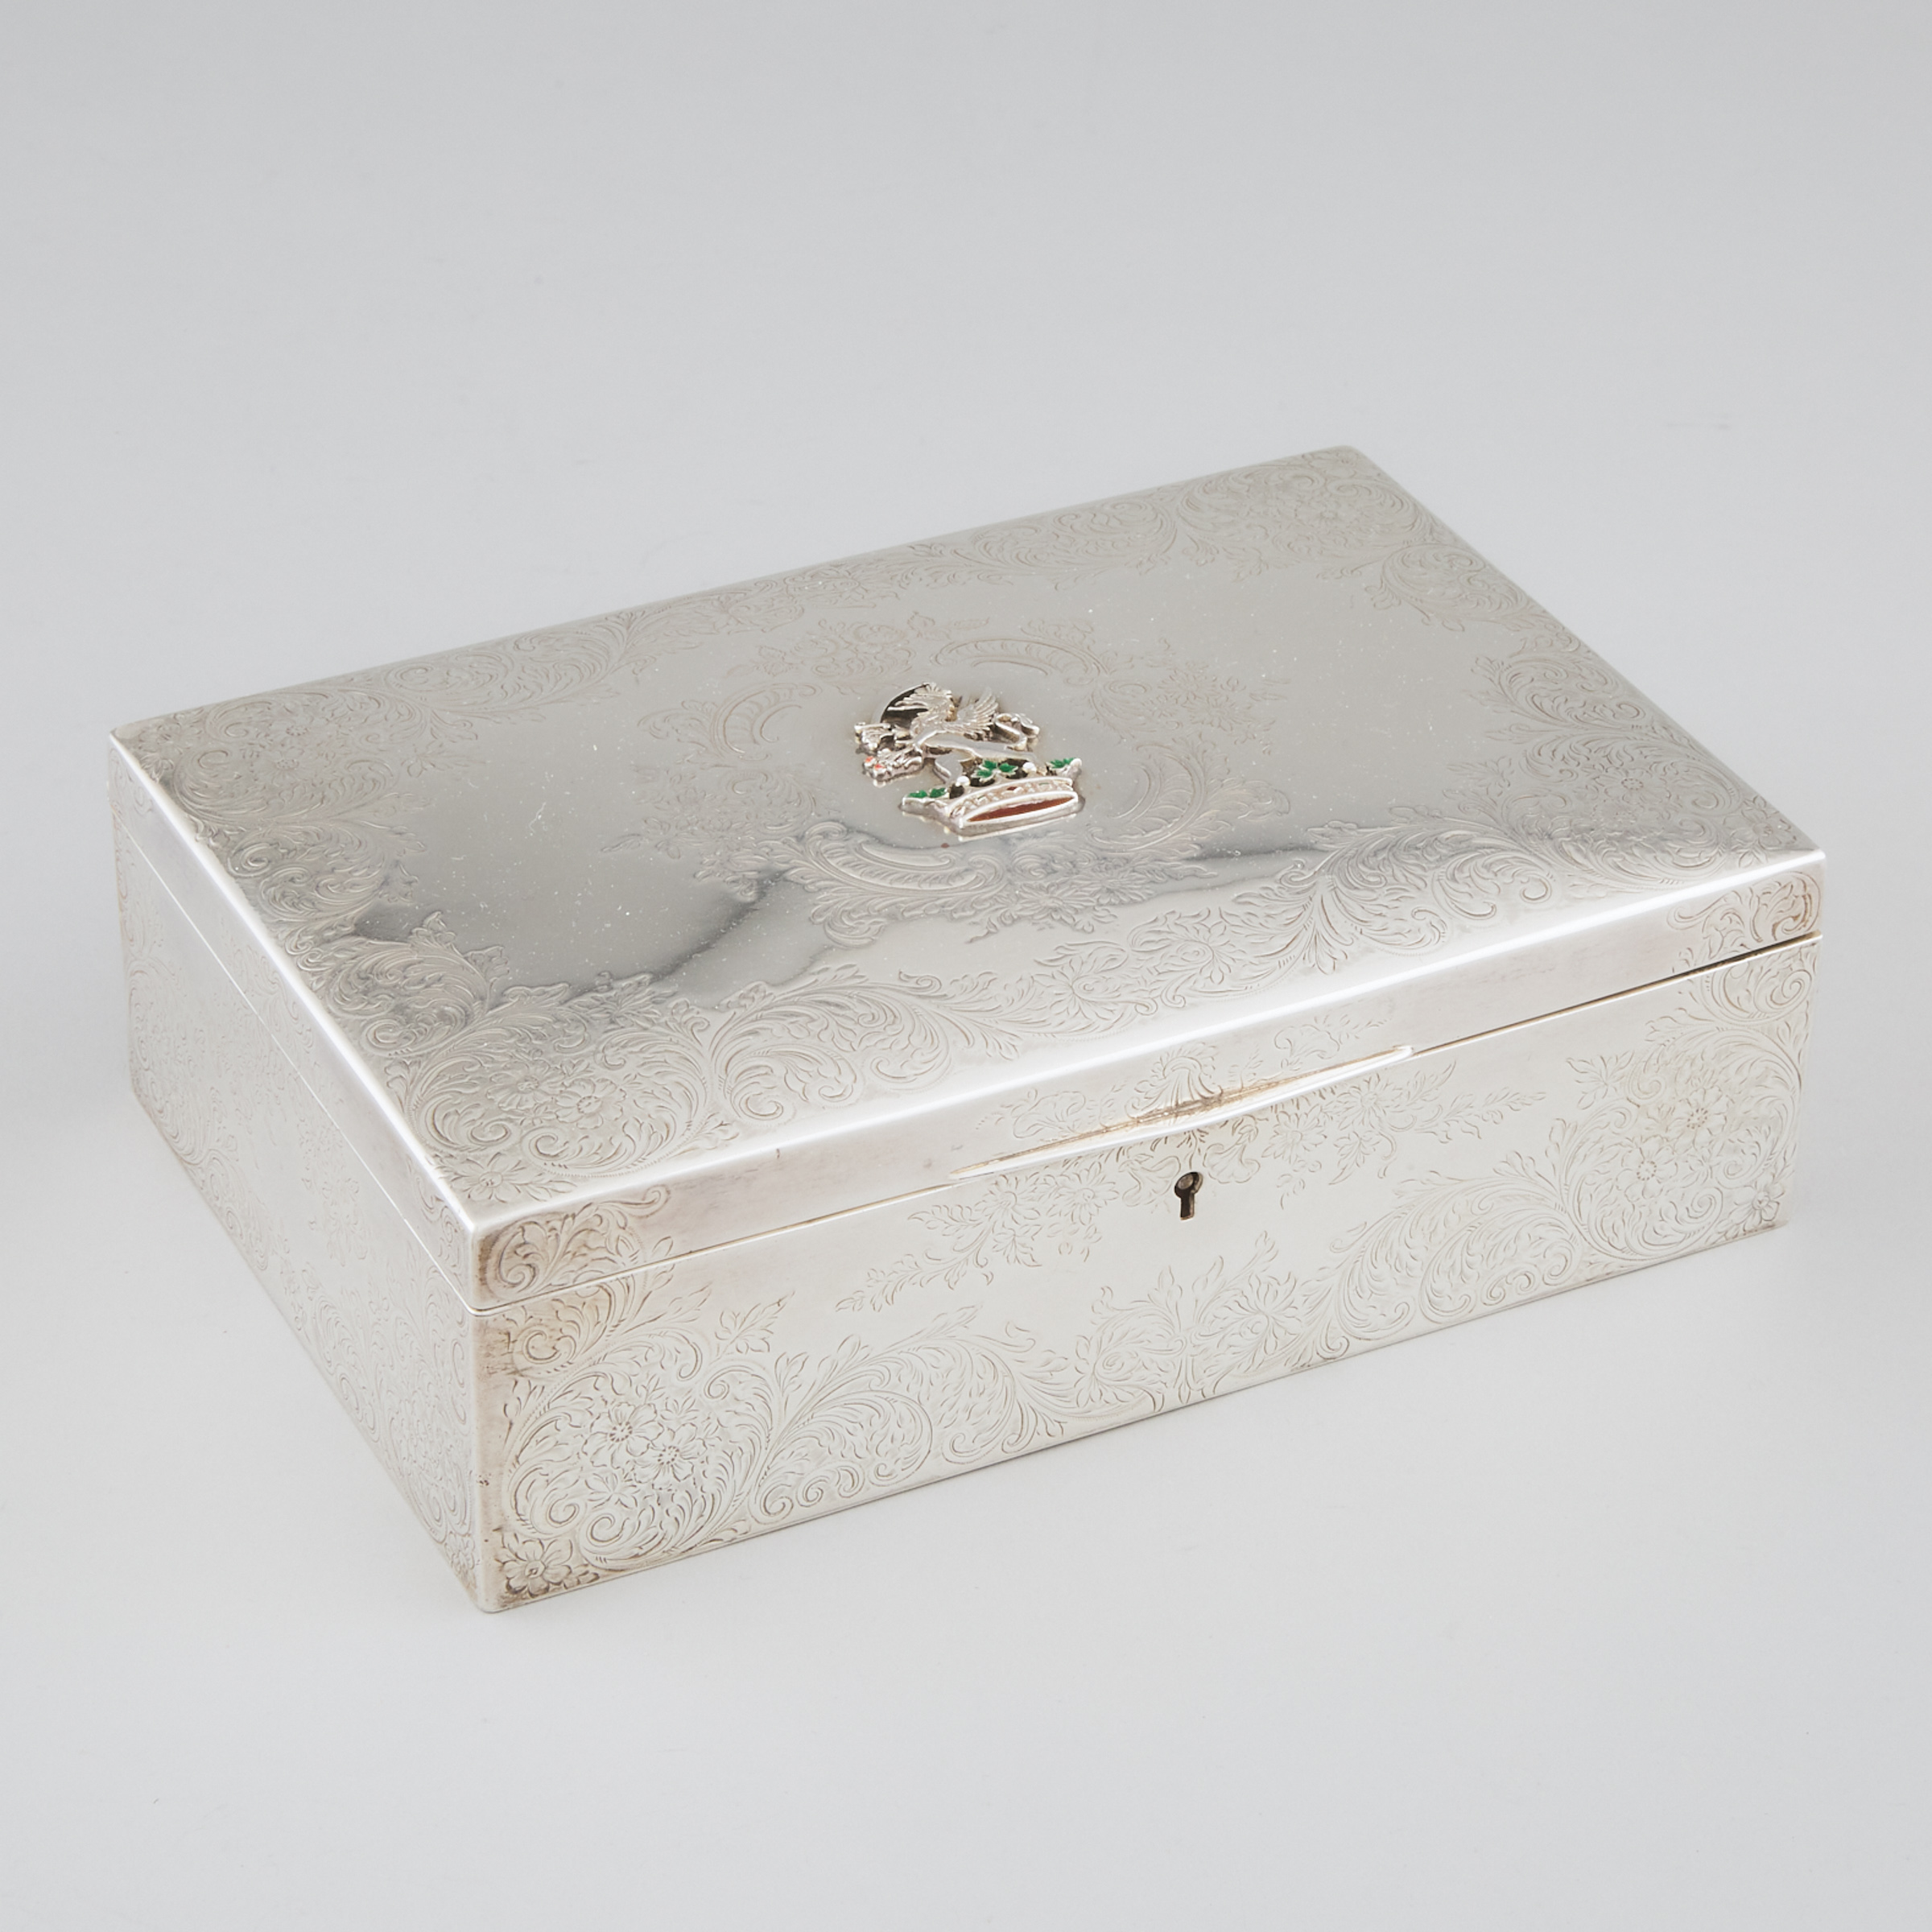 American Silver Rectangular Jewellery Box, John Chattellier, Newark, N.J., for Black, Starr & Frost, early 20th century